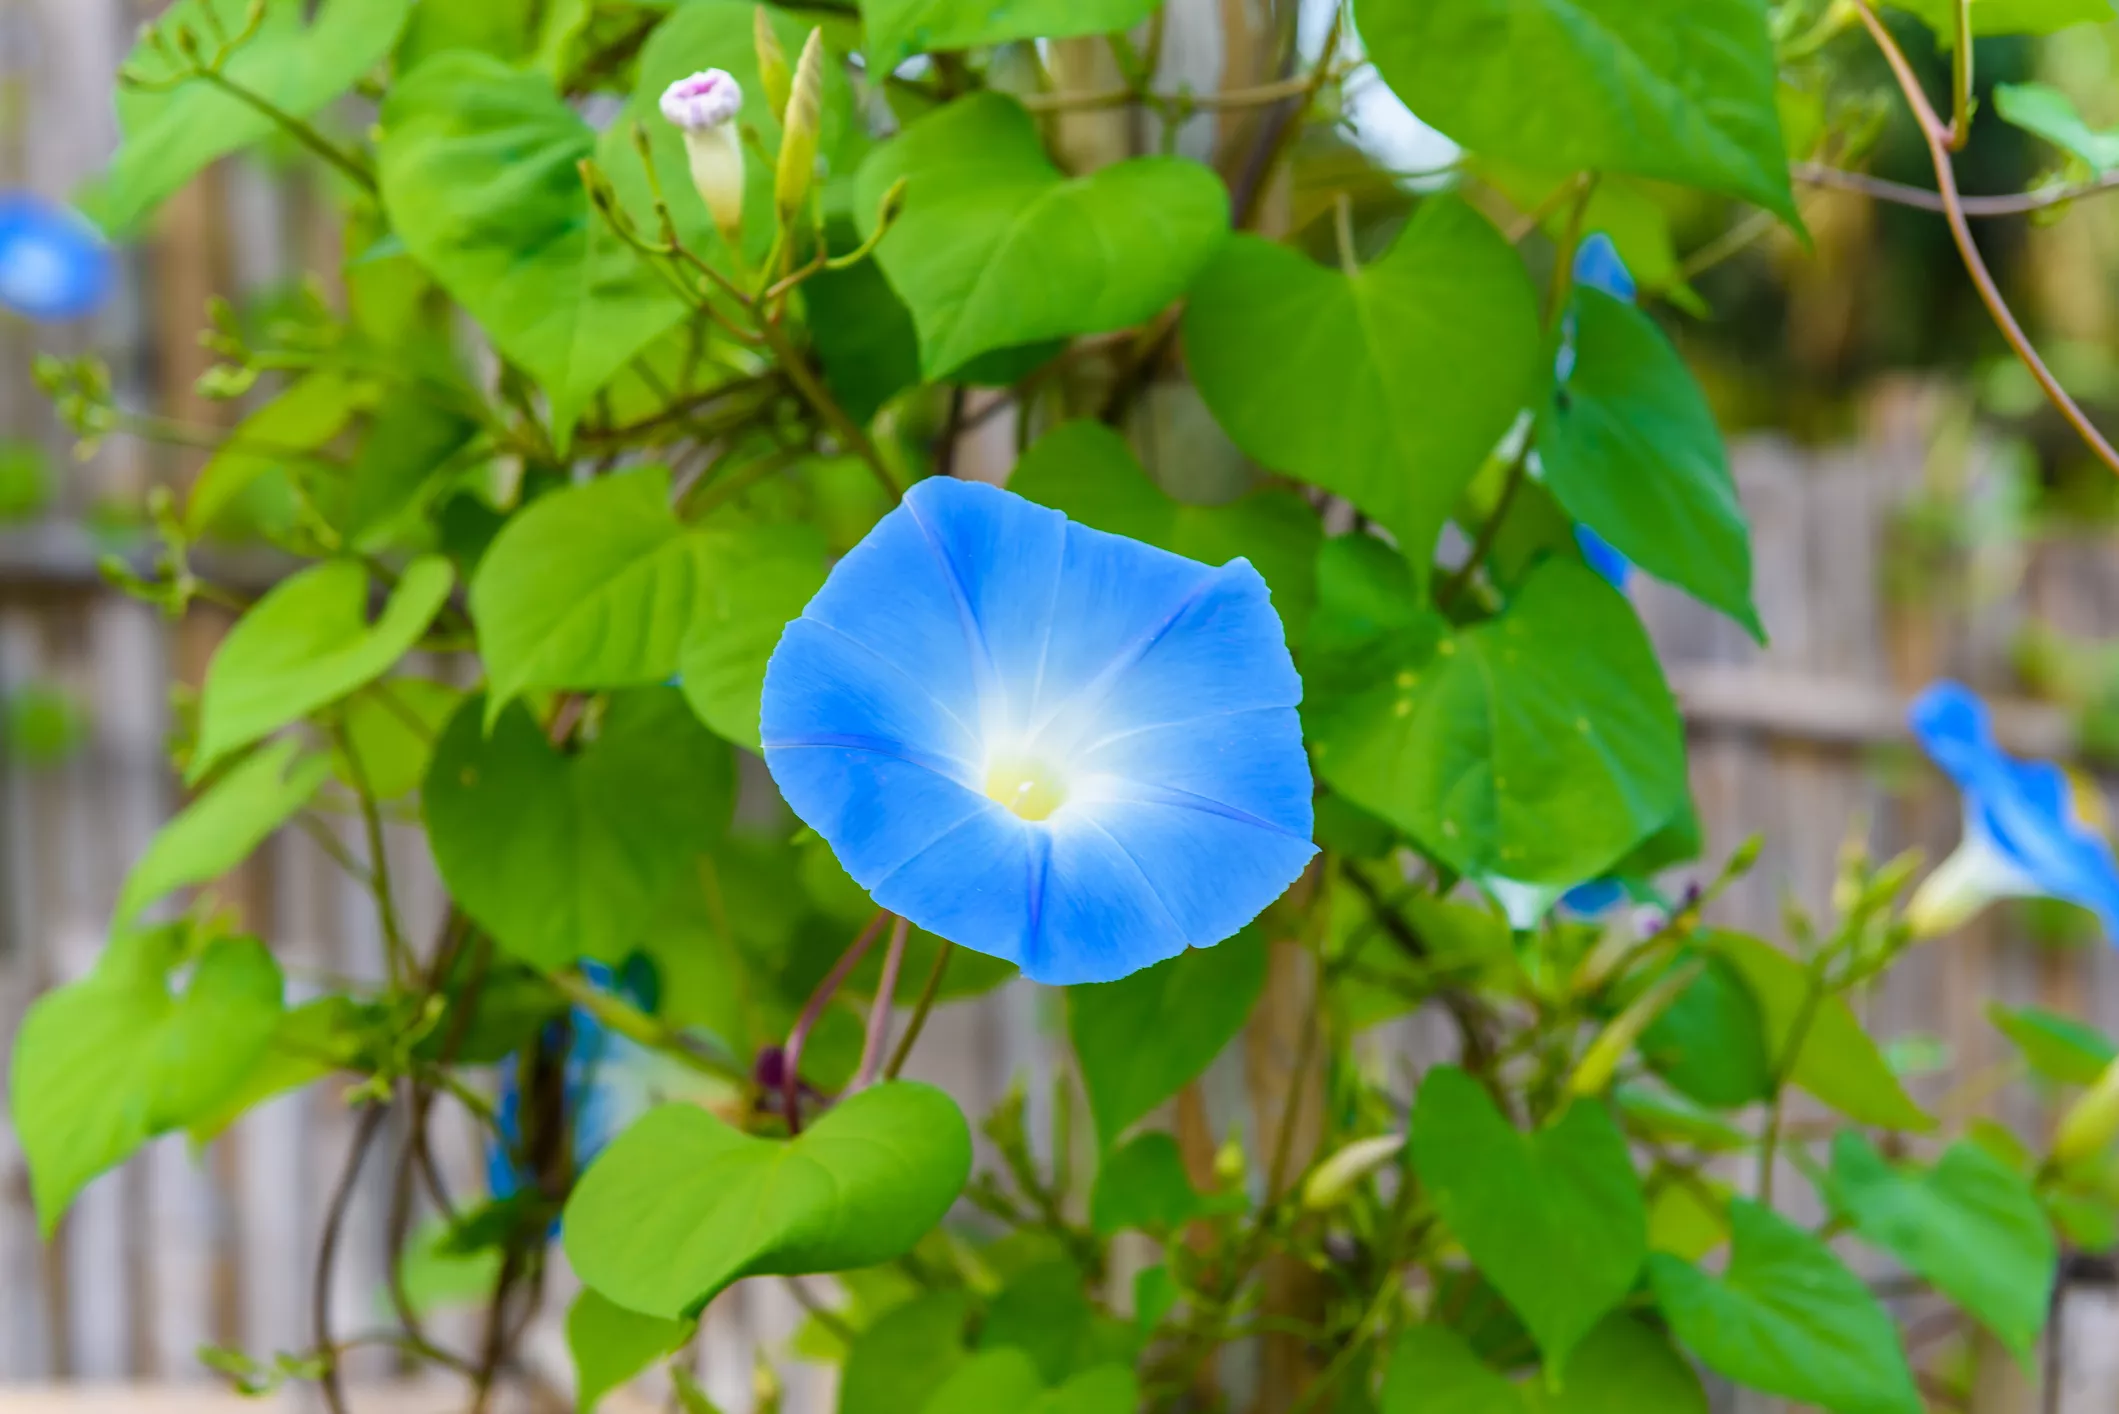 Blue morning glory bloom on a leafy vine